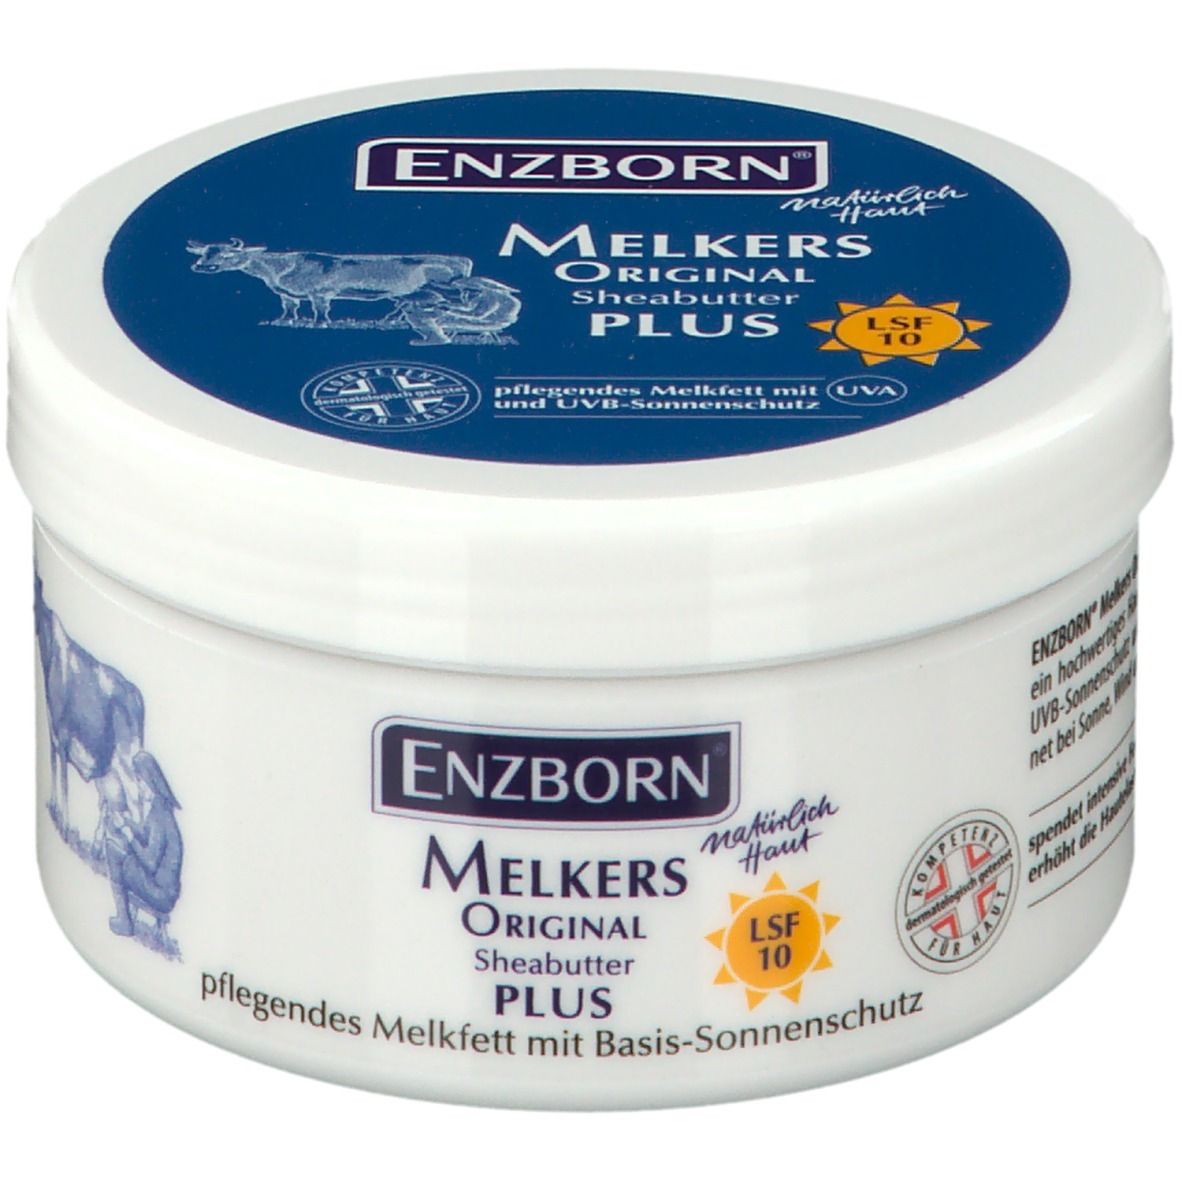 ENZBORN® Melkers Original Premium mit Sheabutter